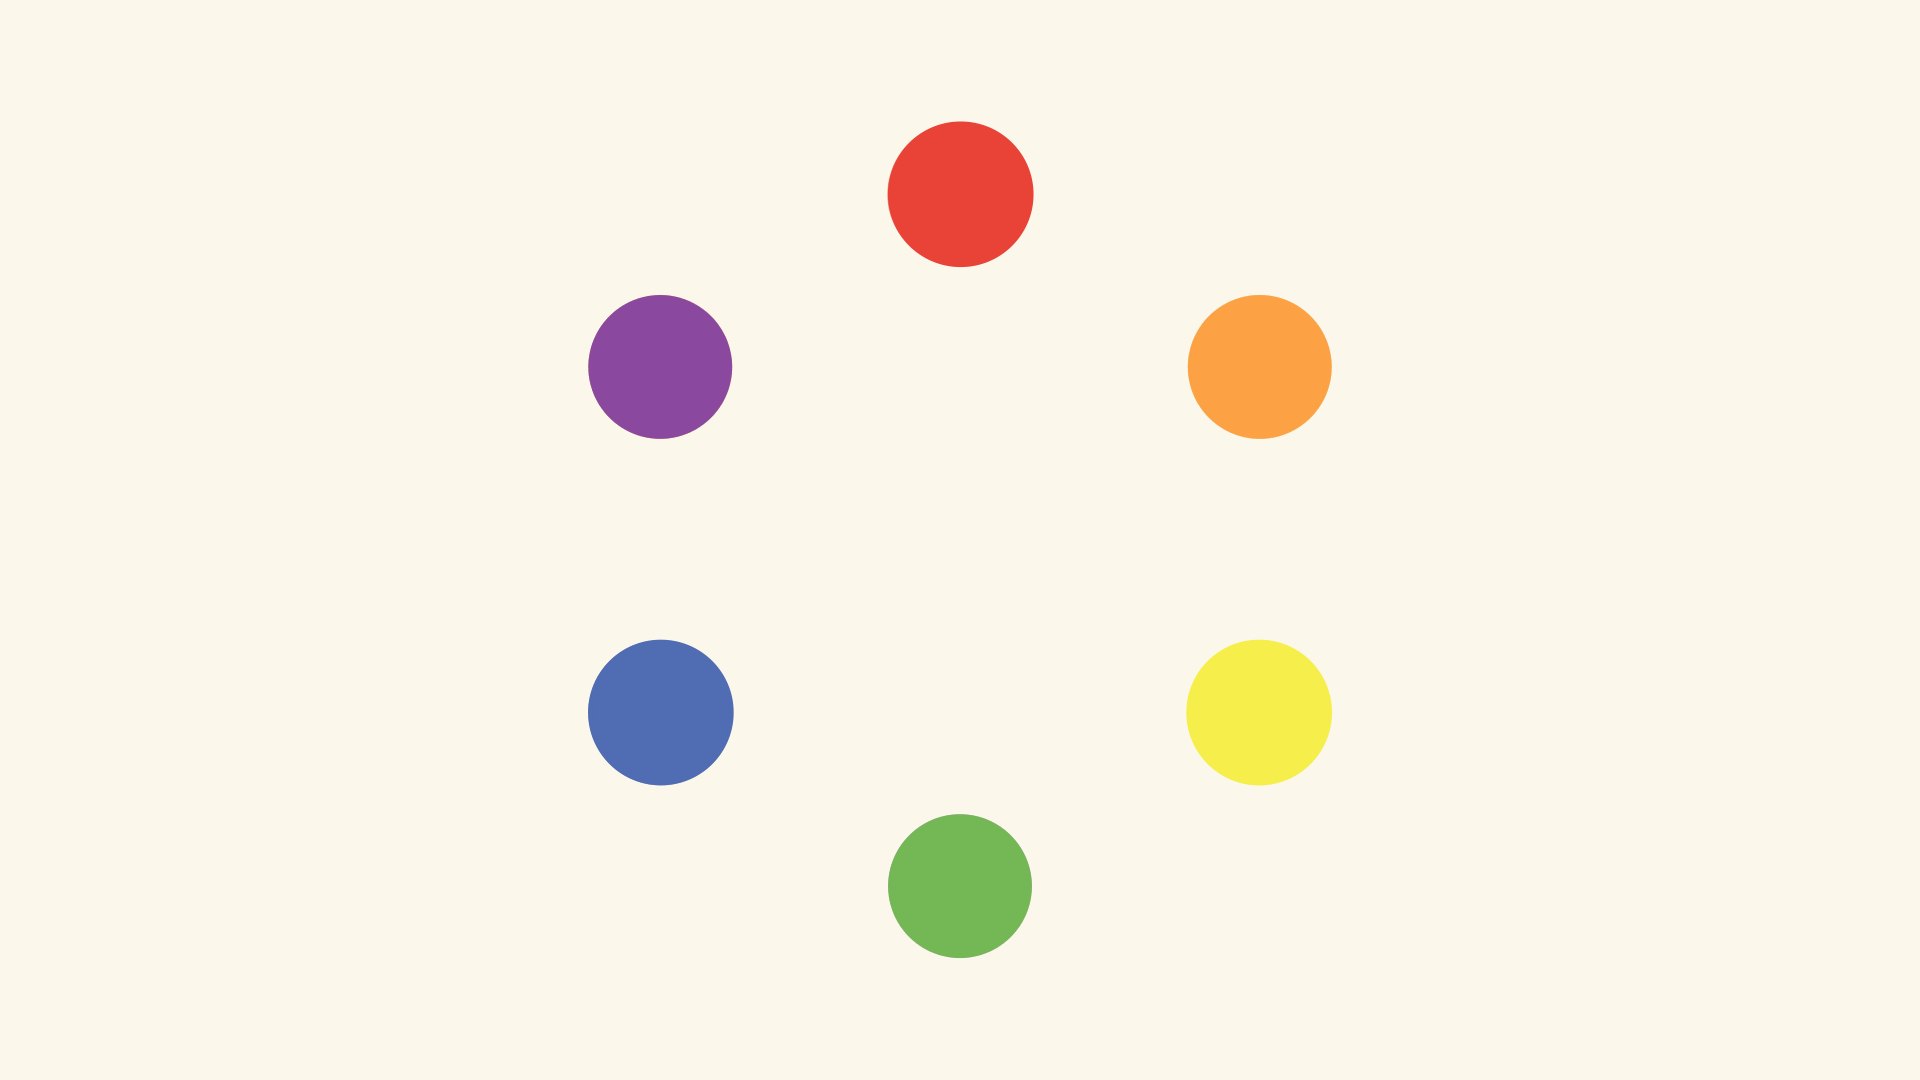 red, orange, yellow, green, blue, purple dots